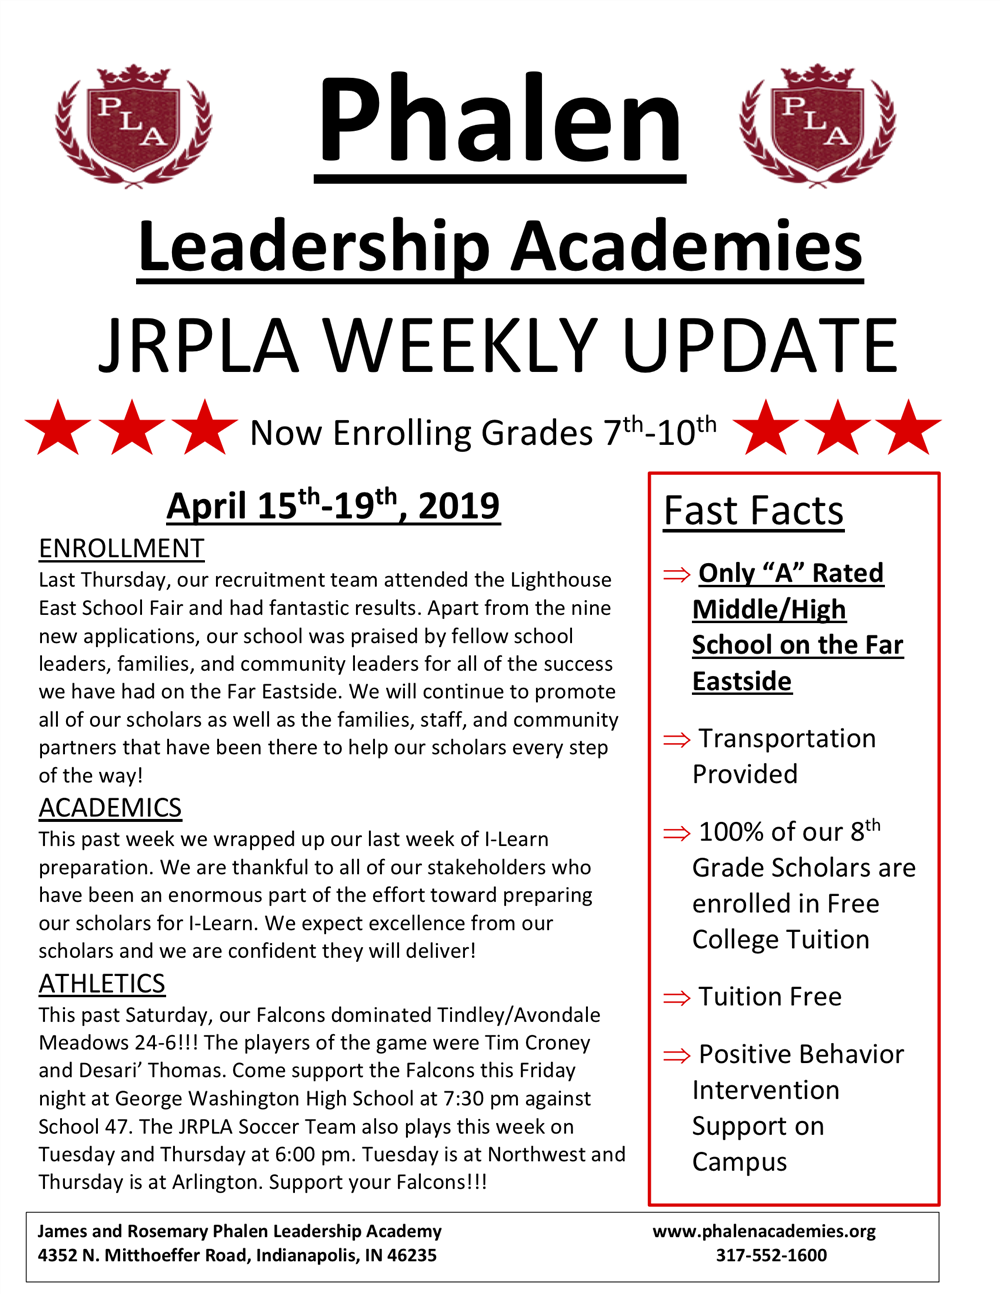 This Week at James and Rosemary Phalen Leadership Academy 